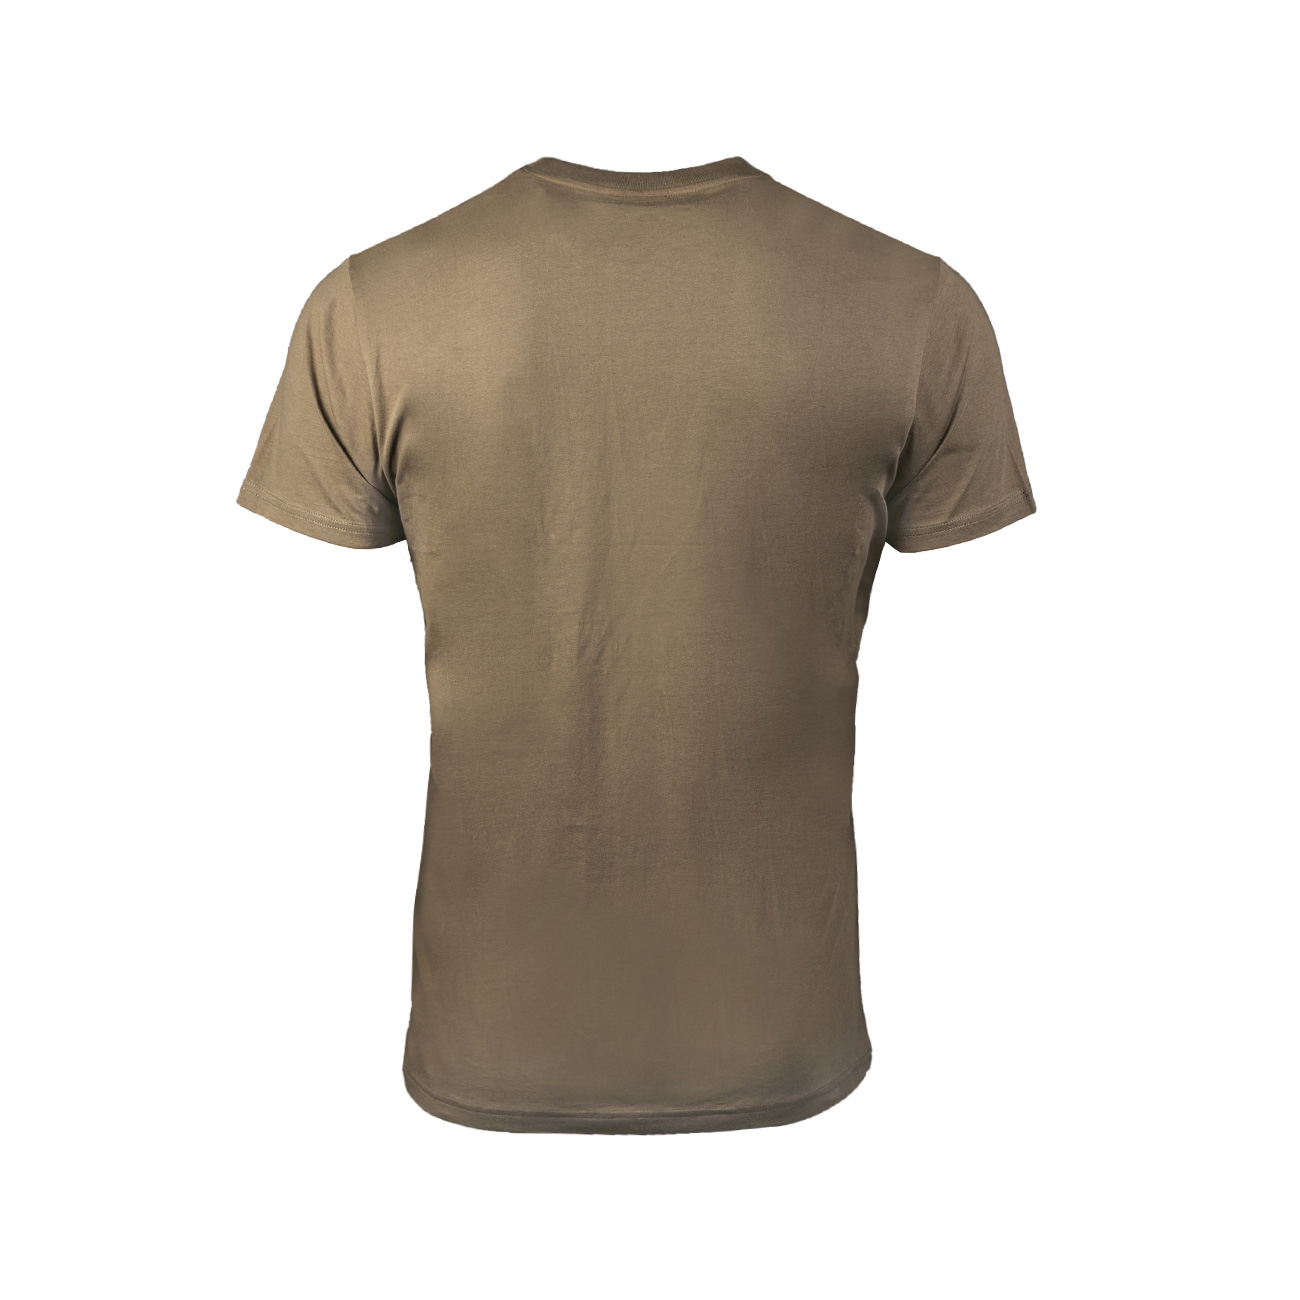 T-Shirt Basic Baumwolle coyote brown Bild 1